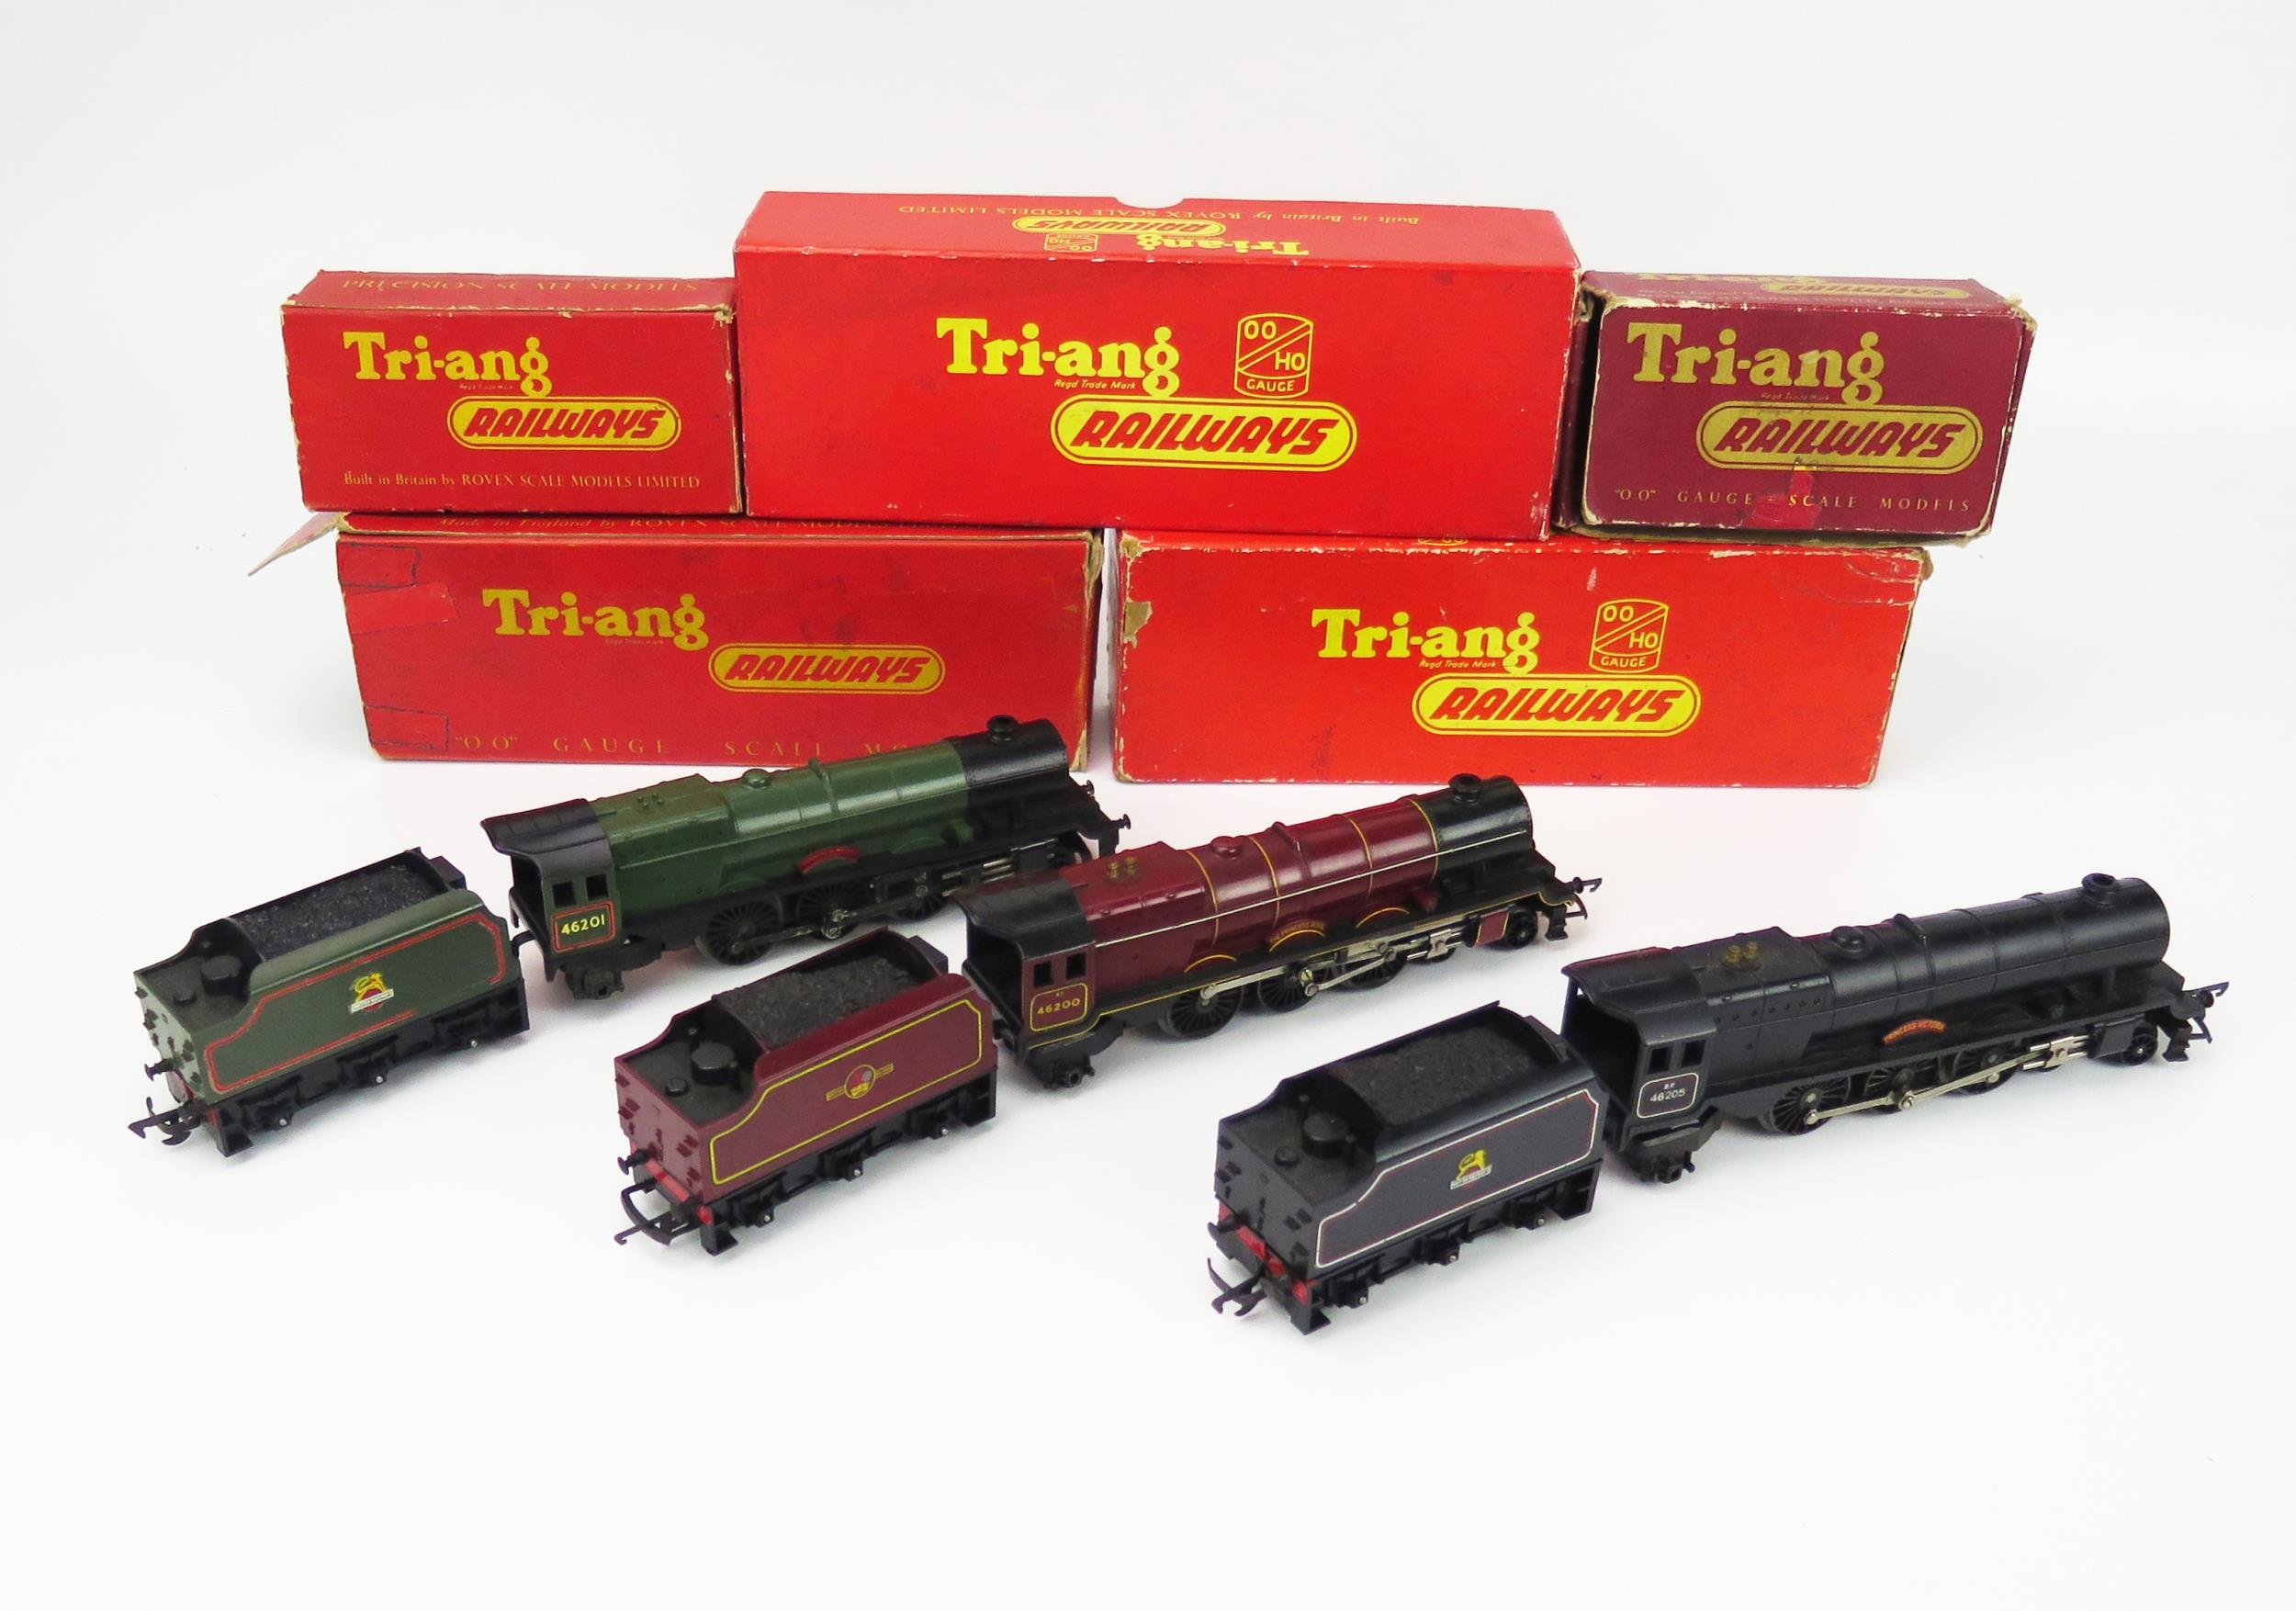 Triang Railways OO Gauge 4-6-2 Princess Class Locomotive and Tender trio - (1) R50 "Princess - Image 2 of 2